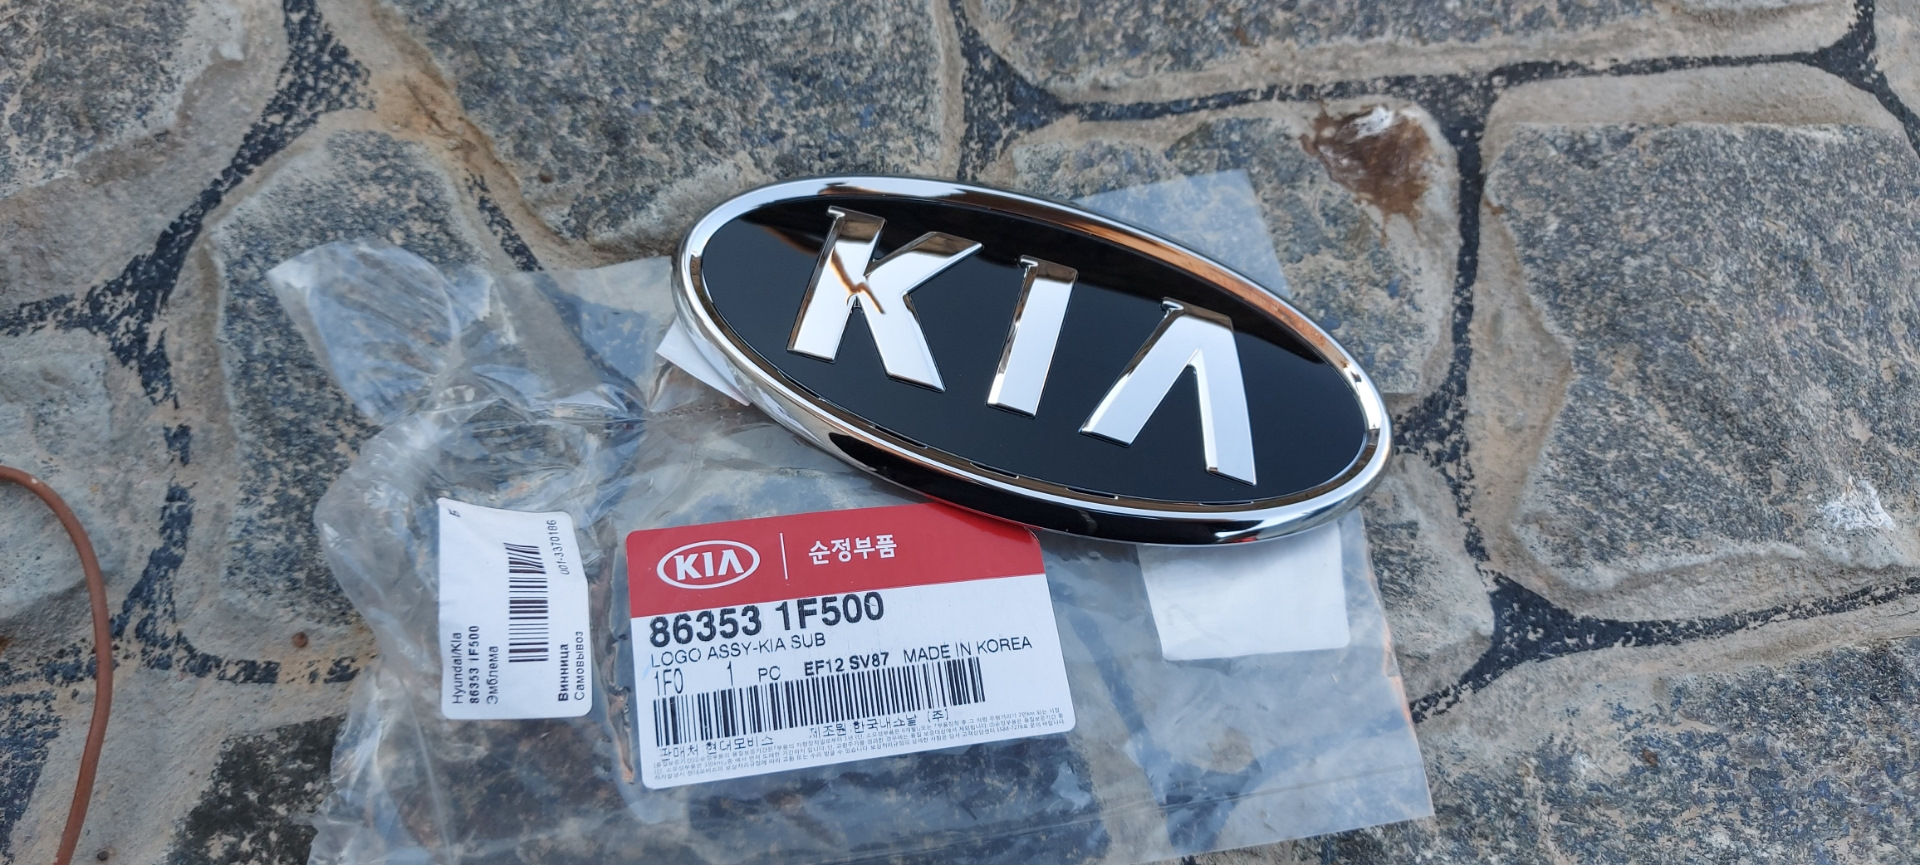 Значки киа сид. Kia Sorento XM эмблема багажник. 863531f500. Эмблема Киа Соренто XM FL. Kia Ceed JD заглушки значок Kia.